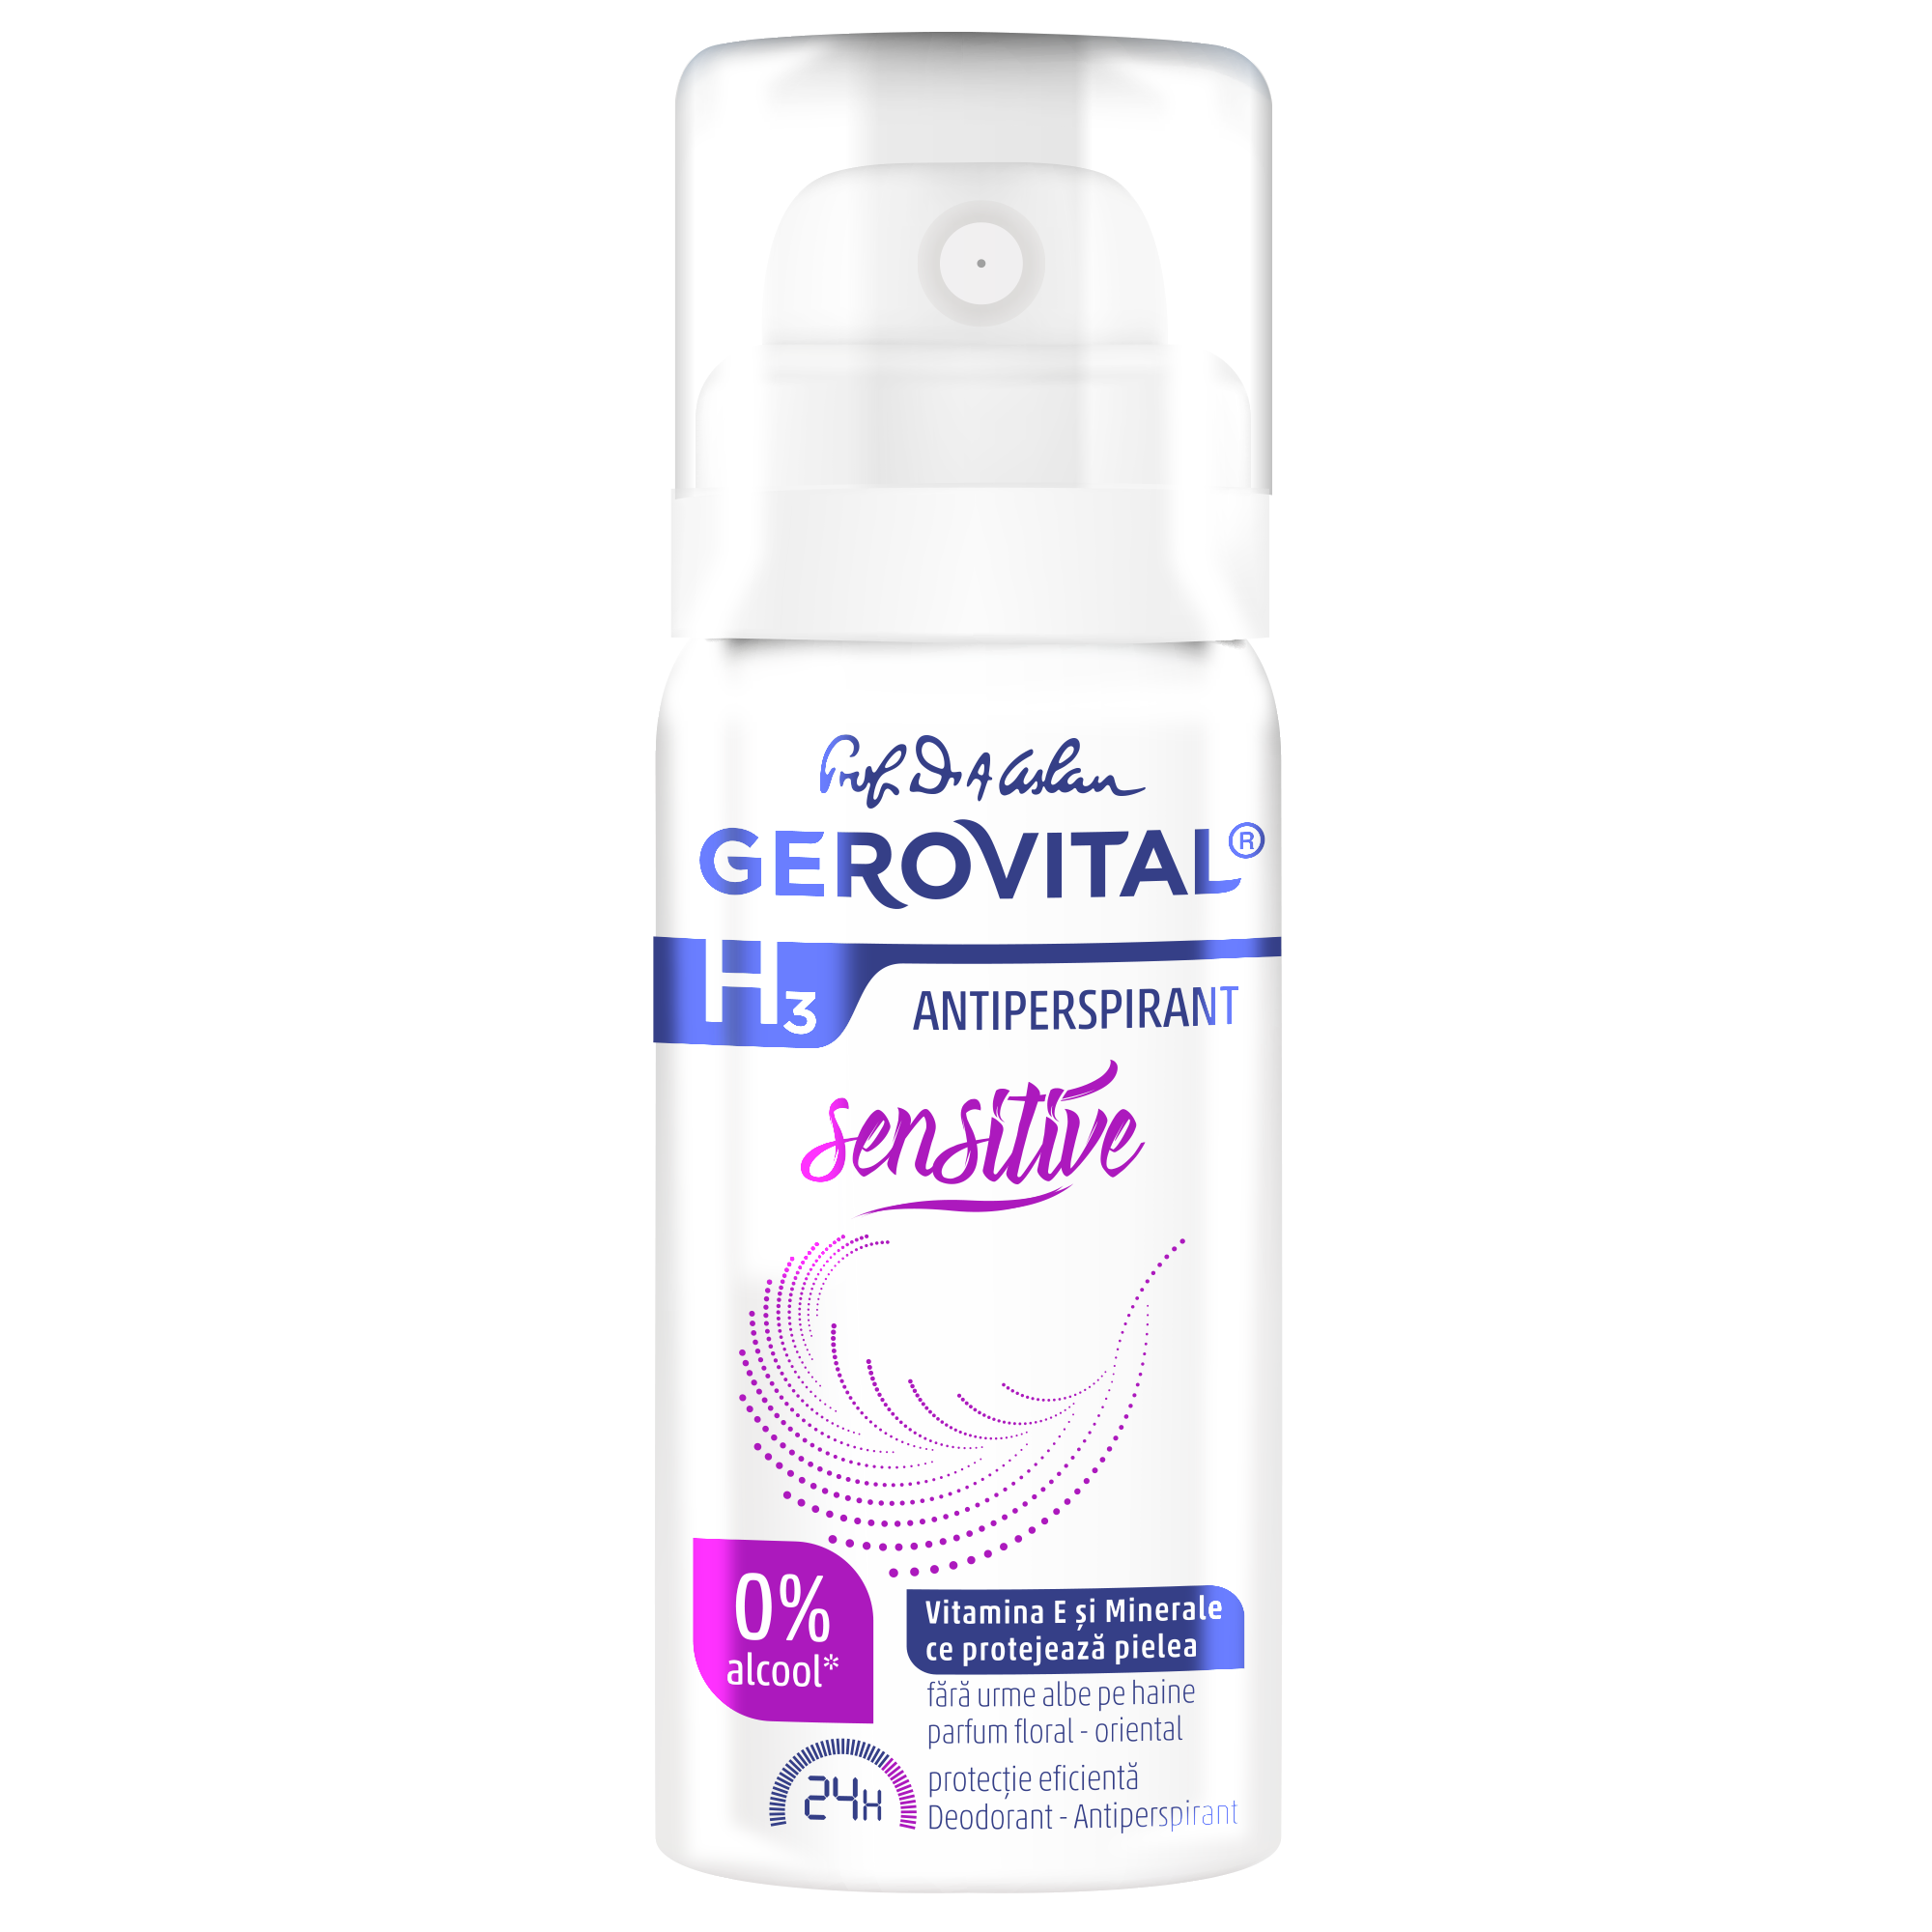 Deodorant spray Gerovital H3 Antiperspirant, Sensitive, 40 ml, Gerovital